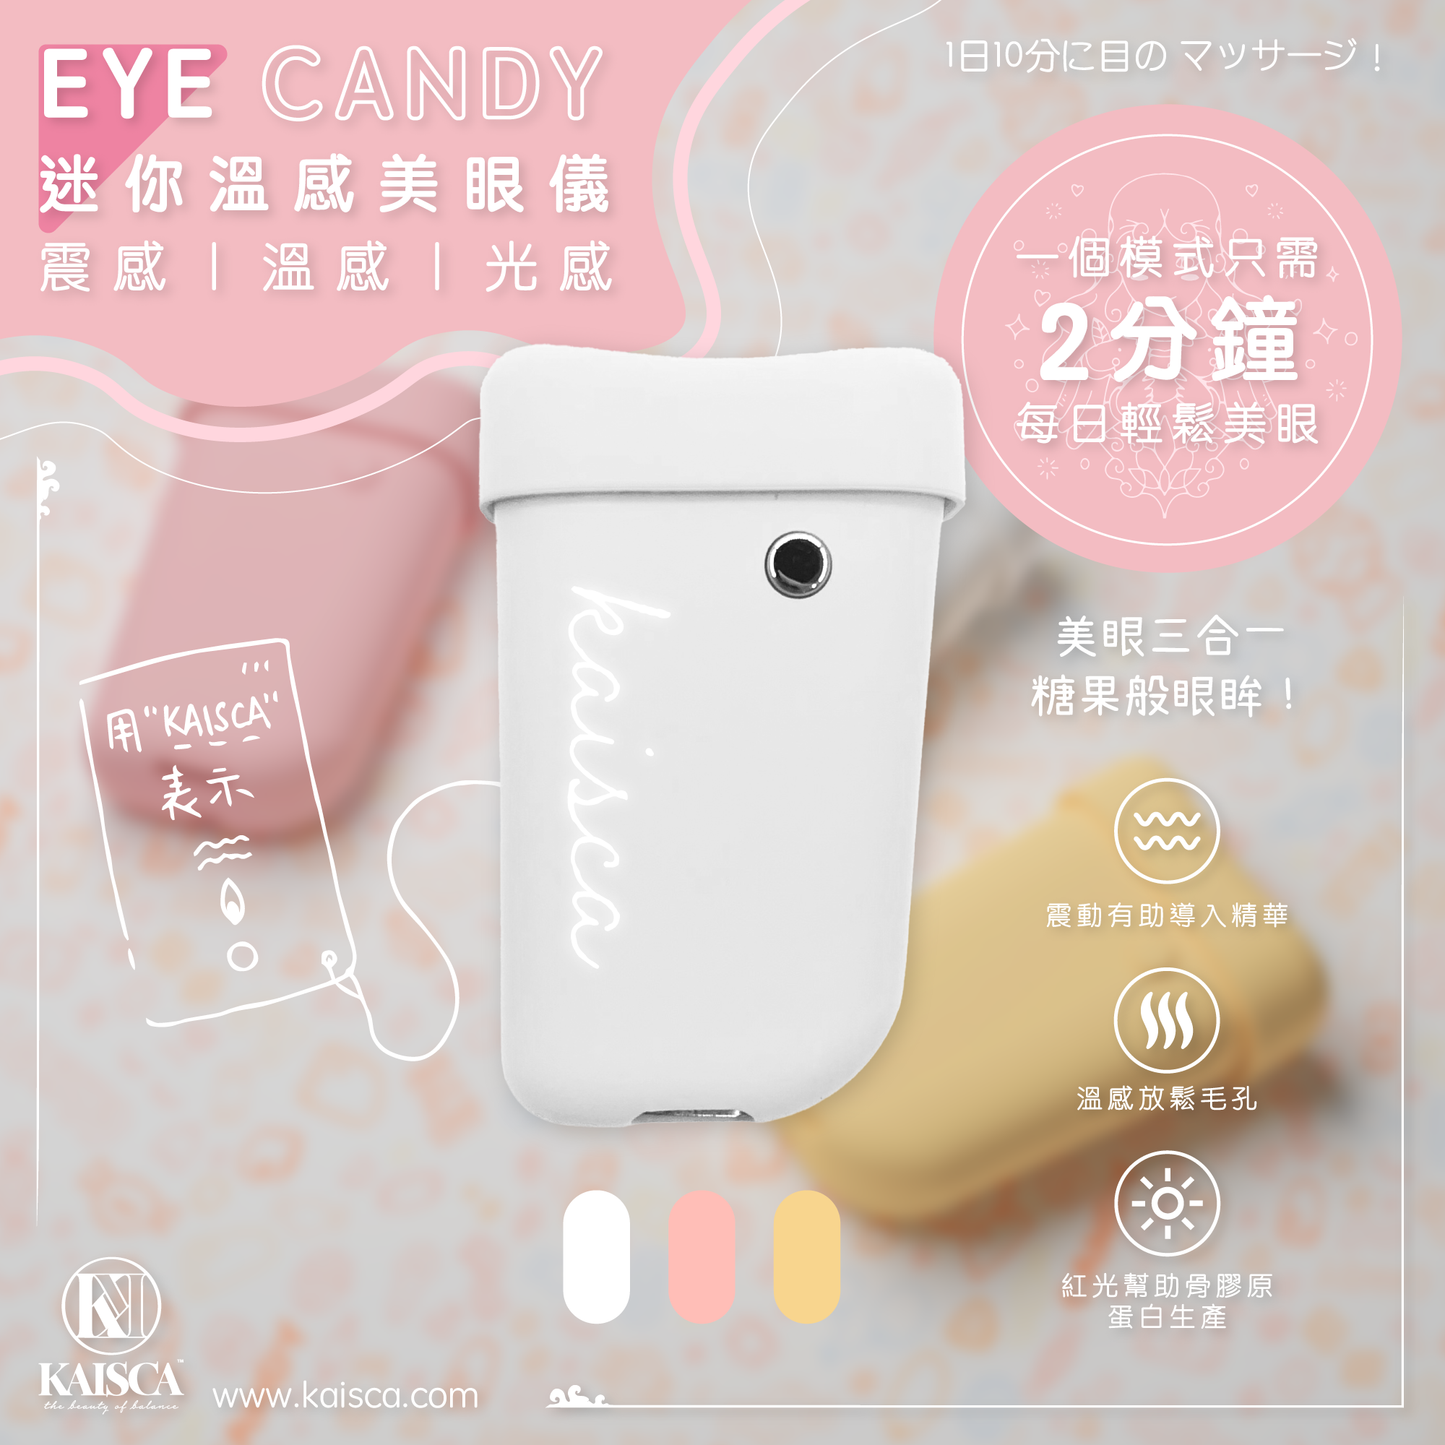 KAISCA - Eye Candy Eye Massager (Mango)